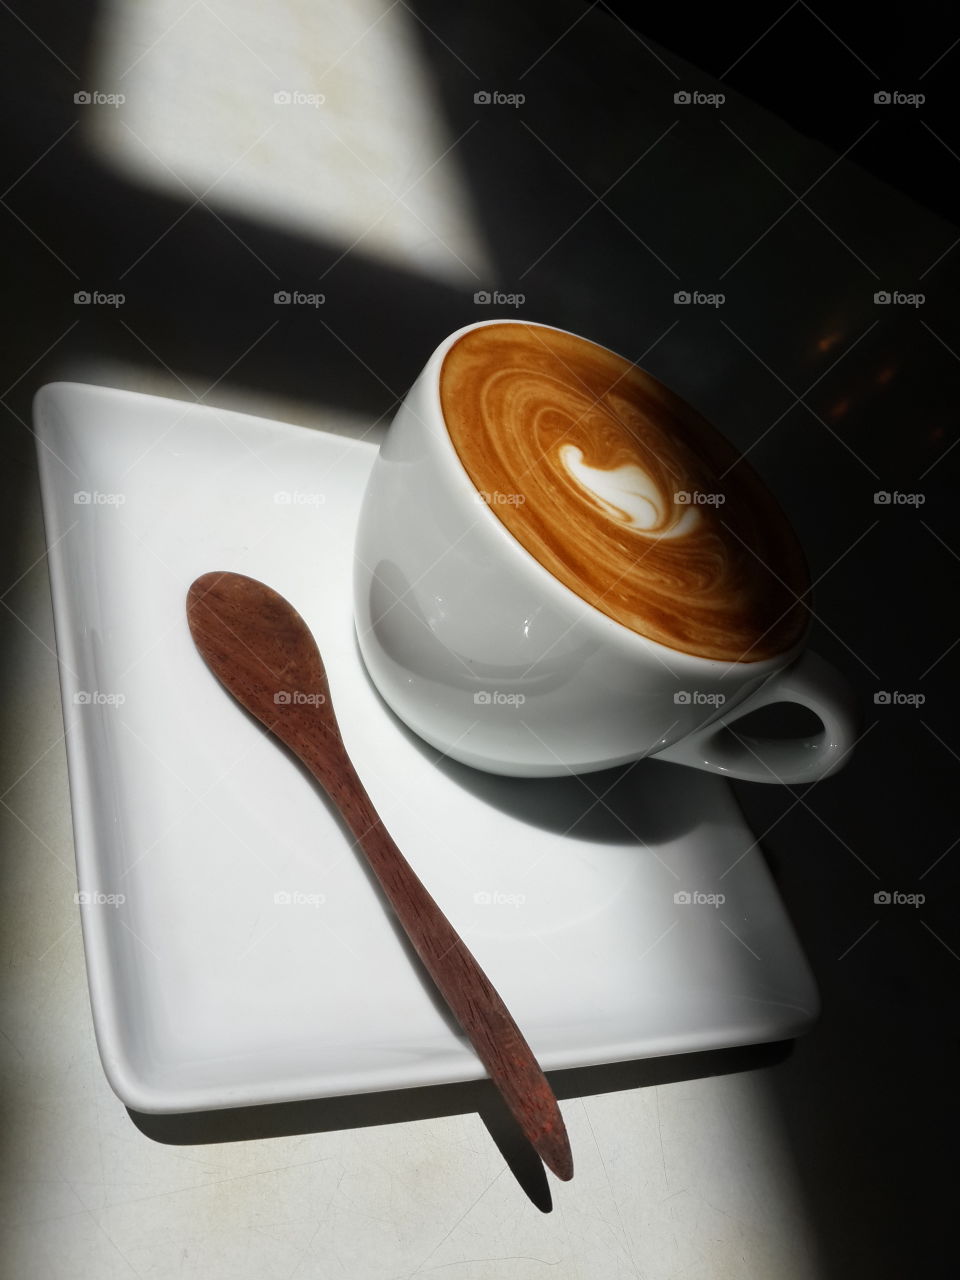 coffee latte in the shadow. art